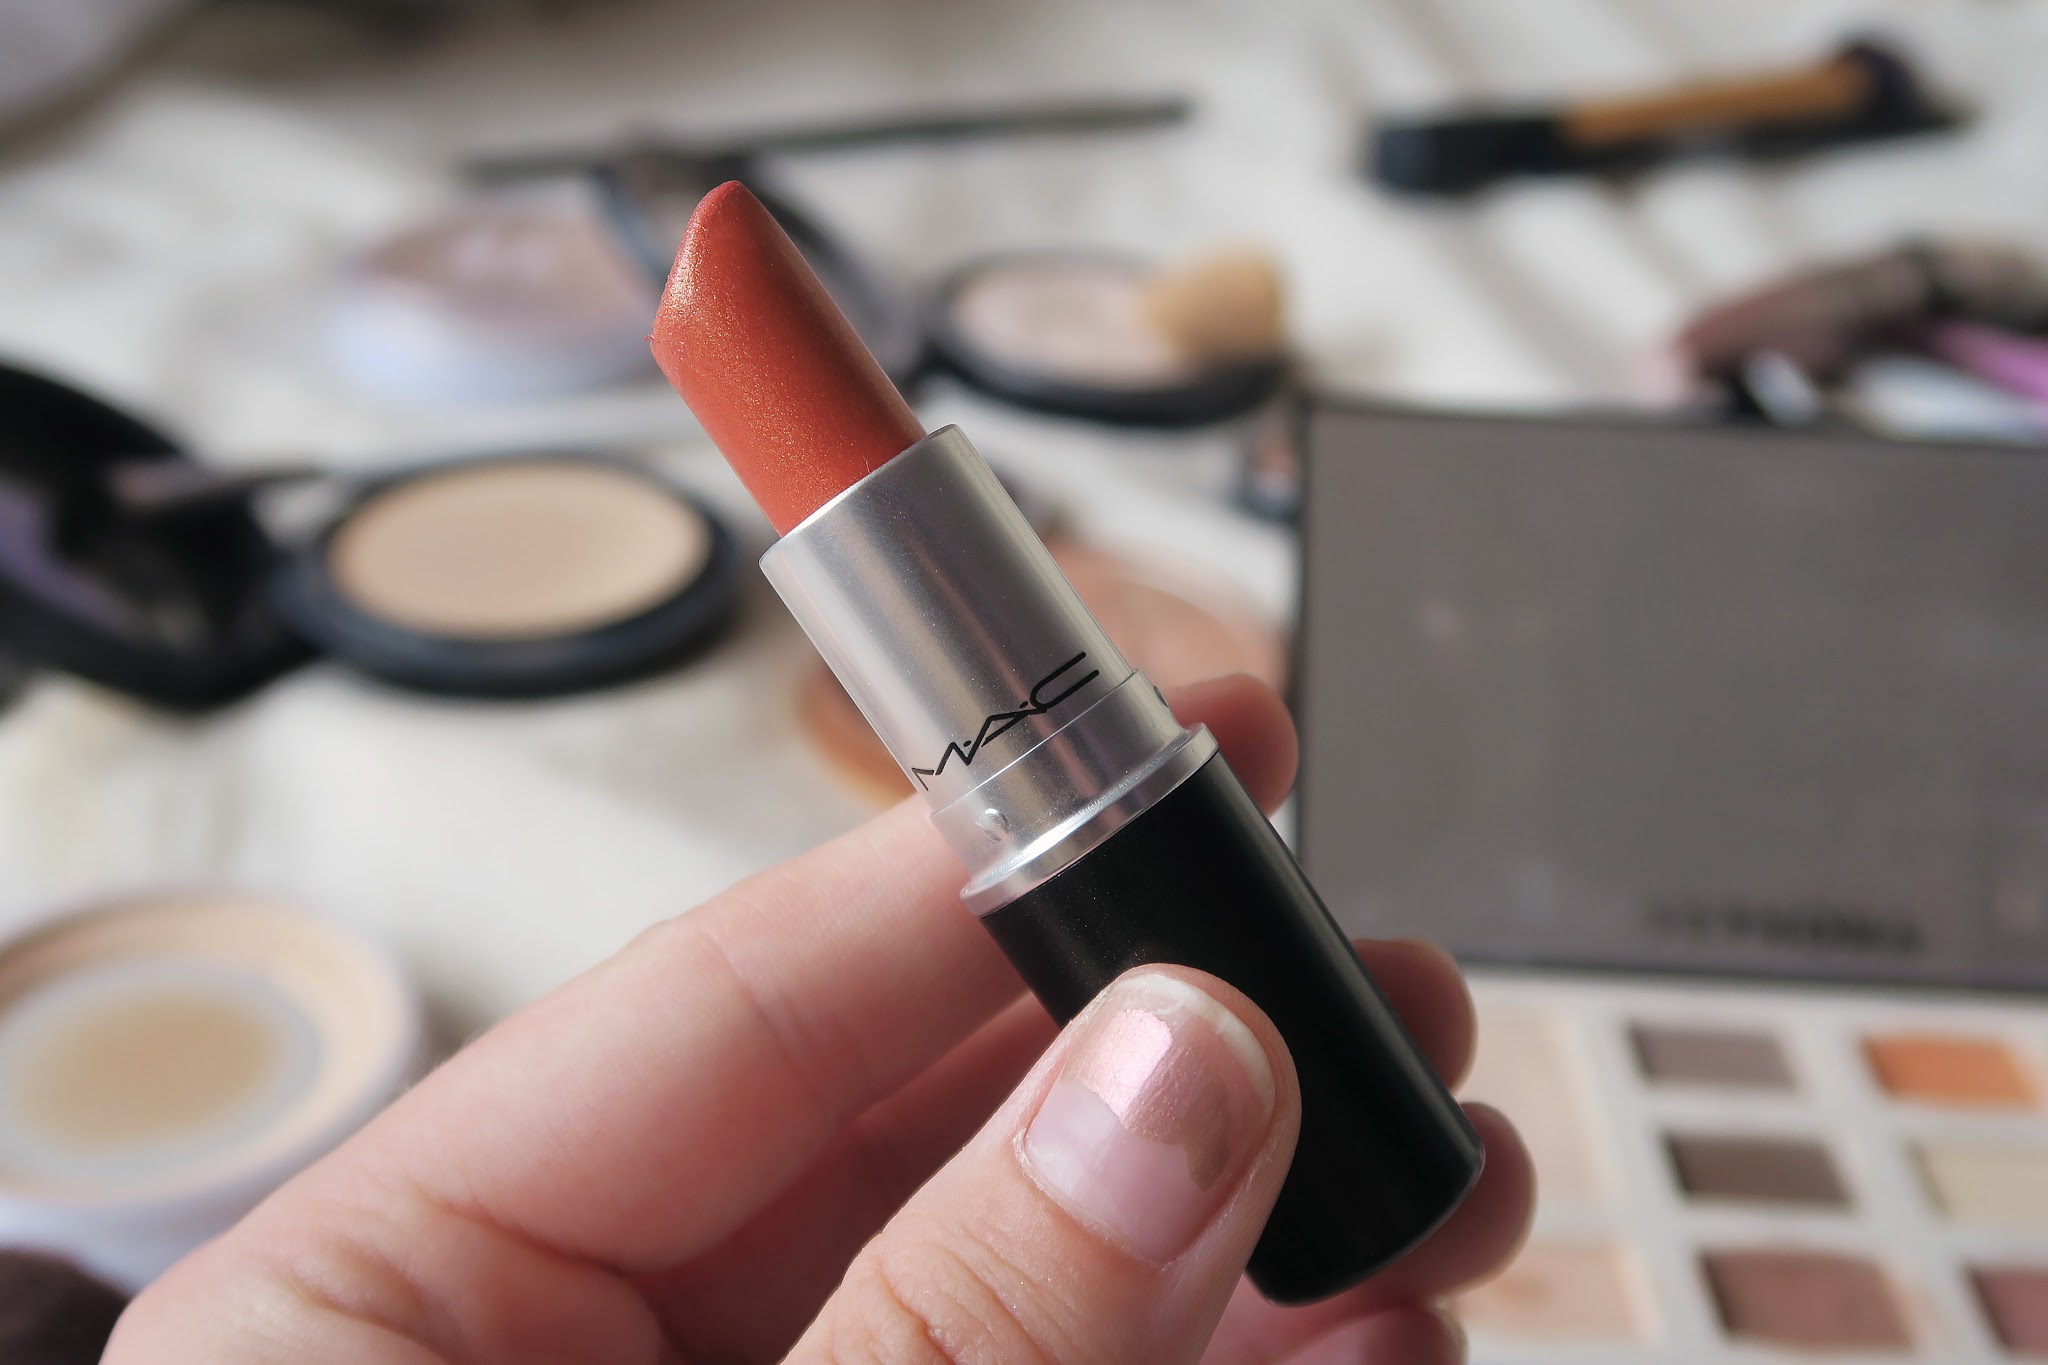 An image of an orange lipstick